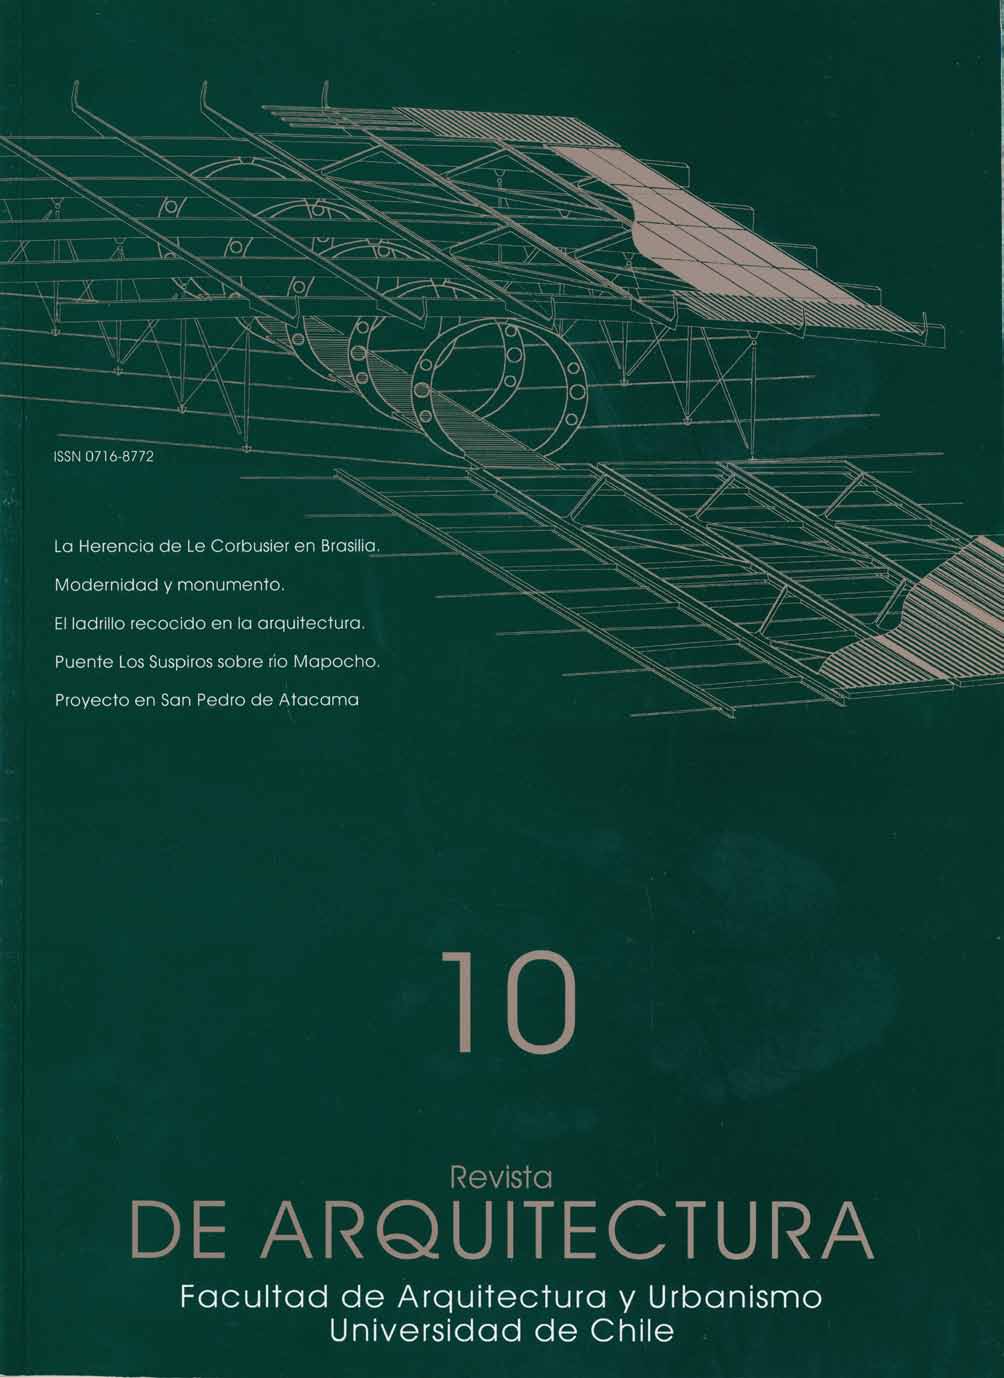 											View Vol. 9 No. 10 (1998): De arquitectura
										